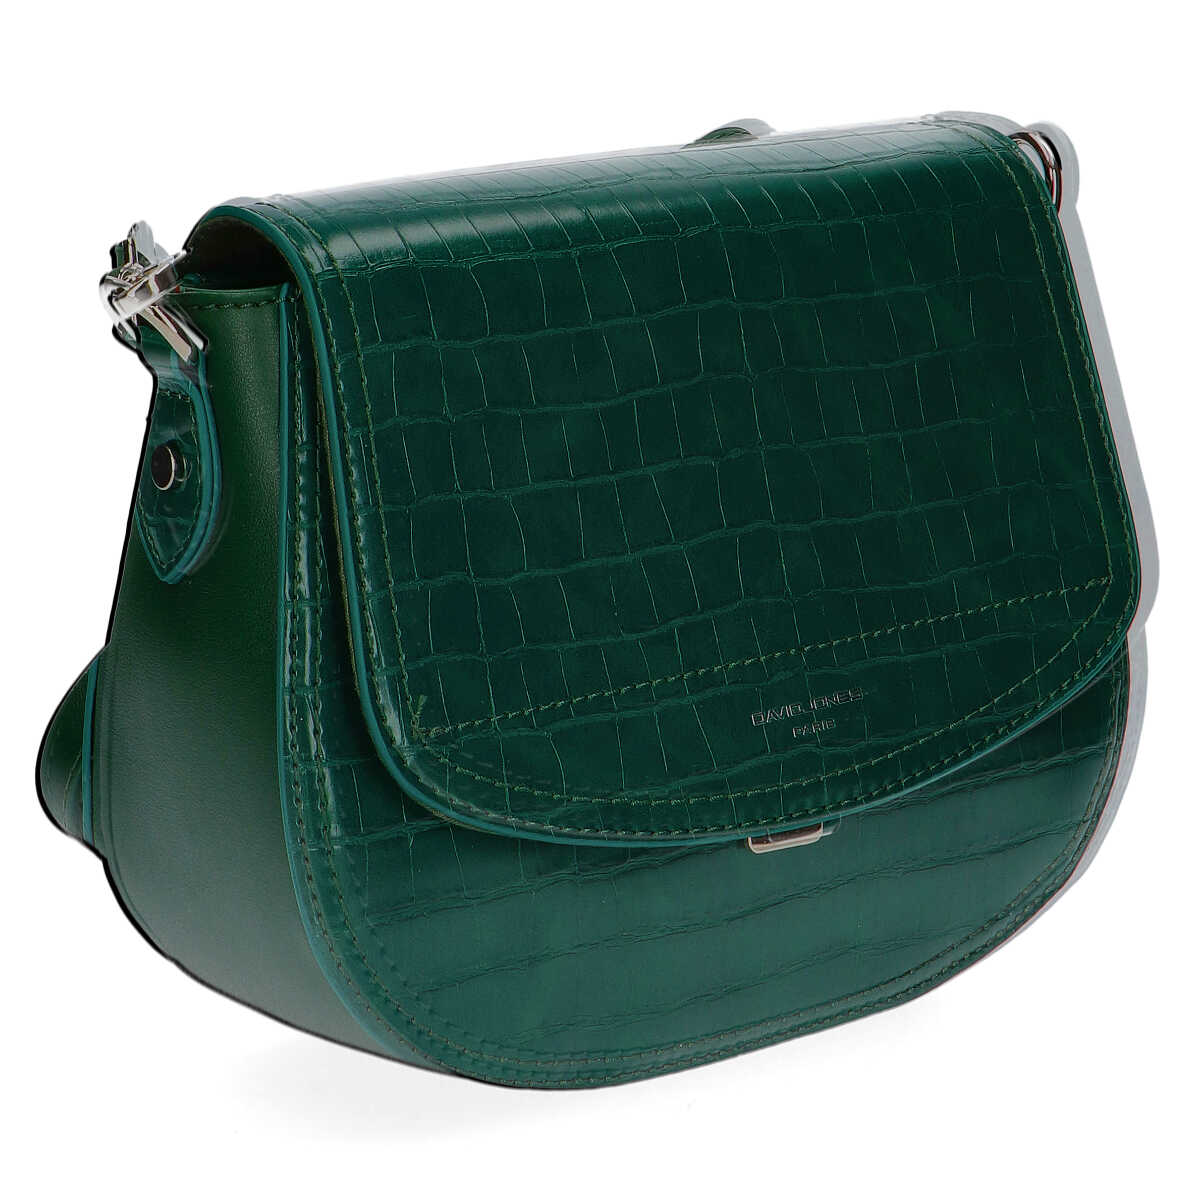 David Jones 6720-2 Green - Free delivery  Spartoo NET ! - Bags Handbags  Women USD/$43.20